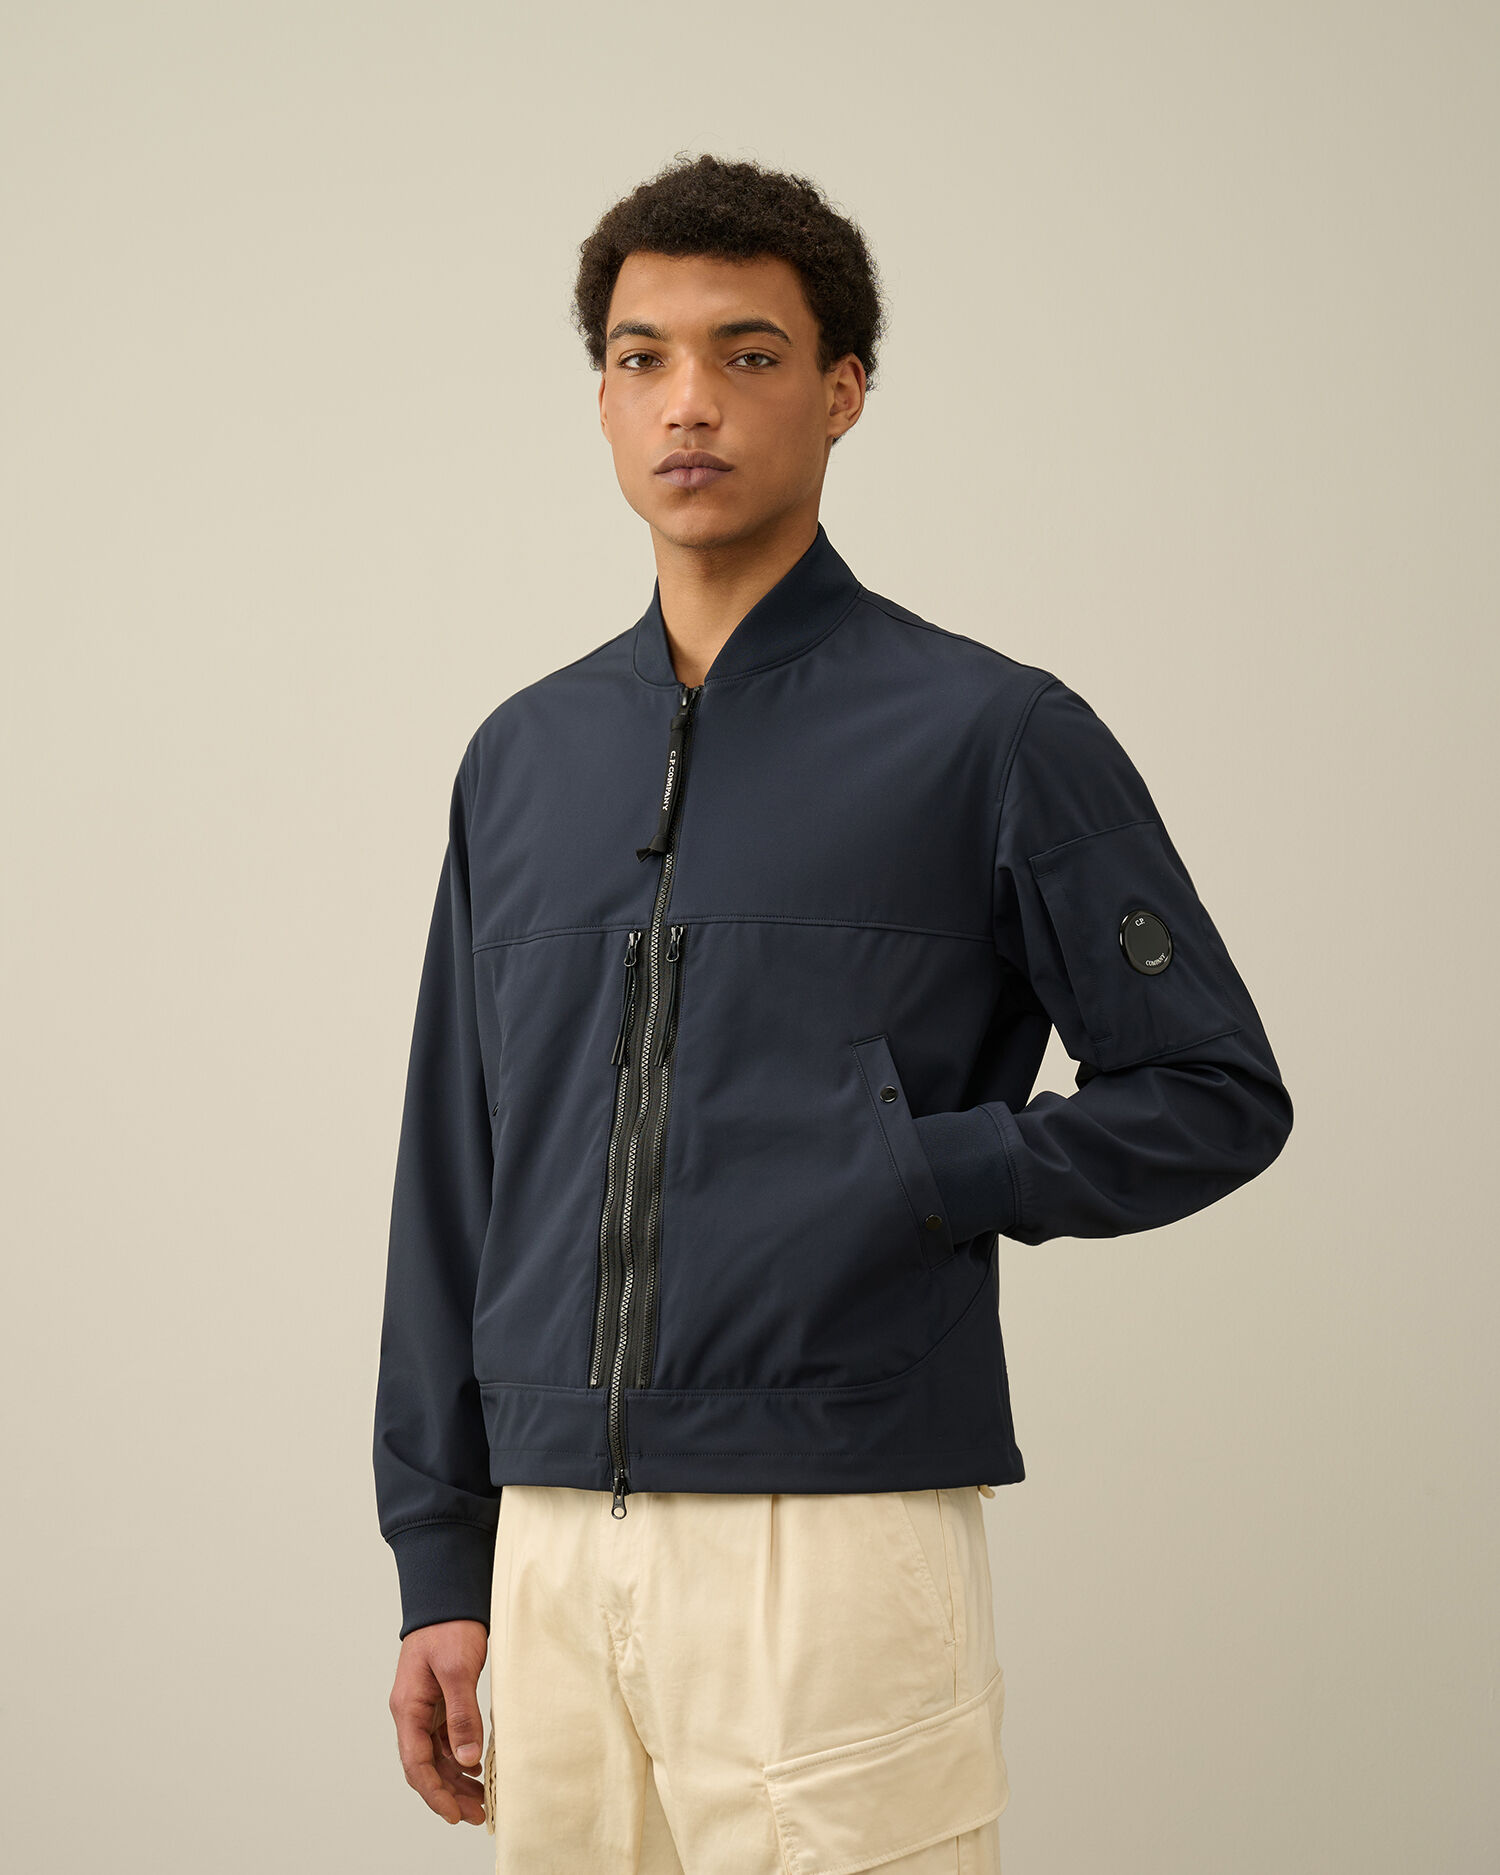 Outerwear - Men's Jackets, Coats & Gilets | C.P. Company